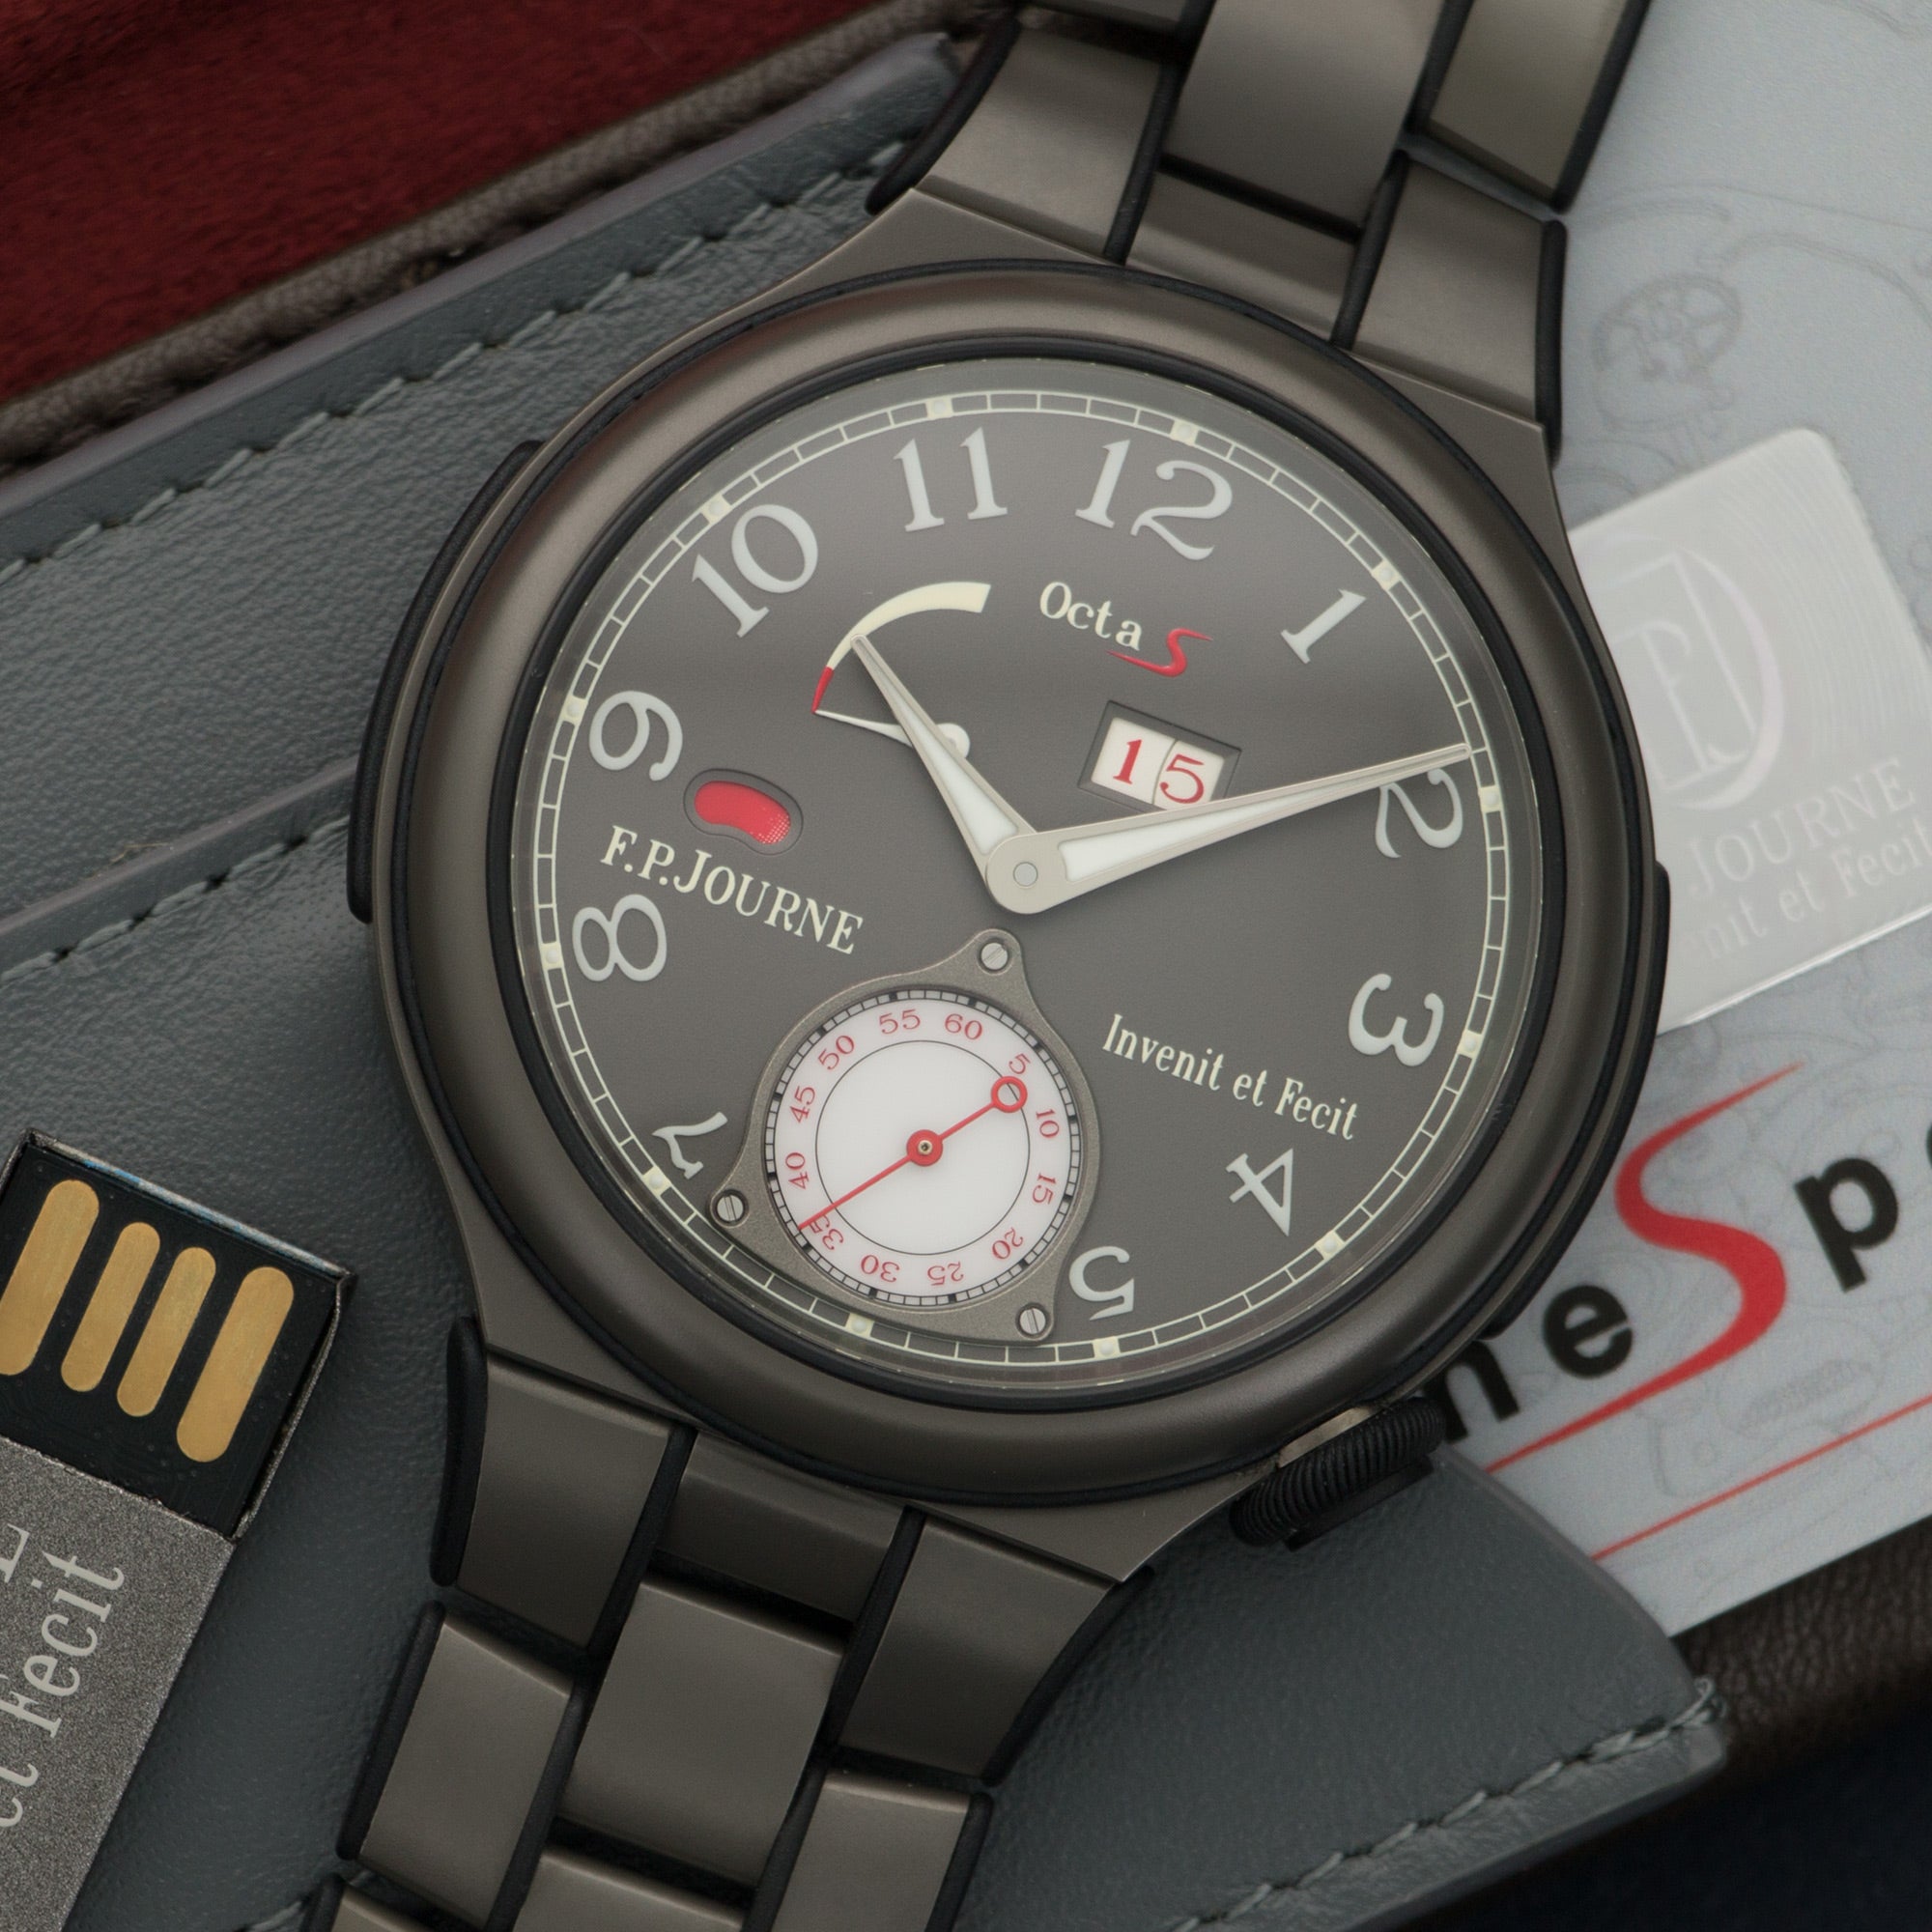 FP Journe - F.P. Journe Titanium Octa S Sport Watch - The Keystone Watches